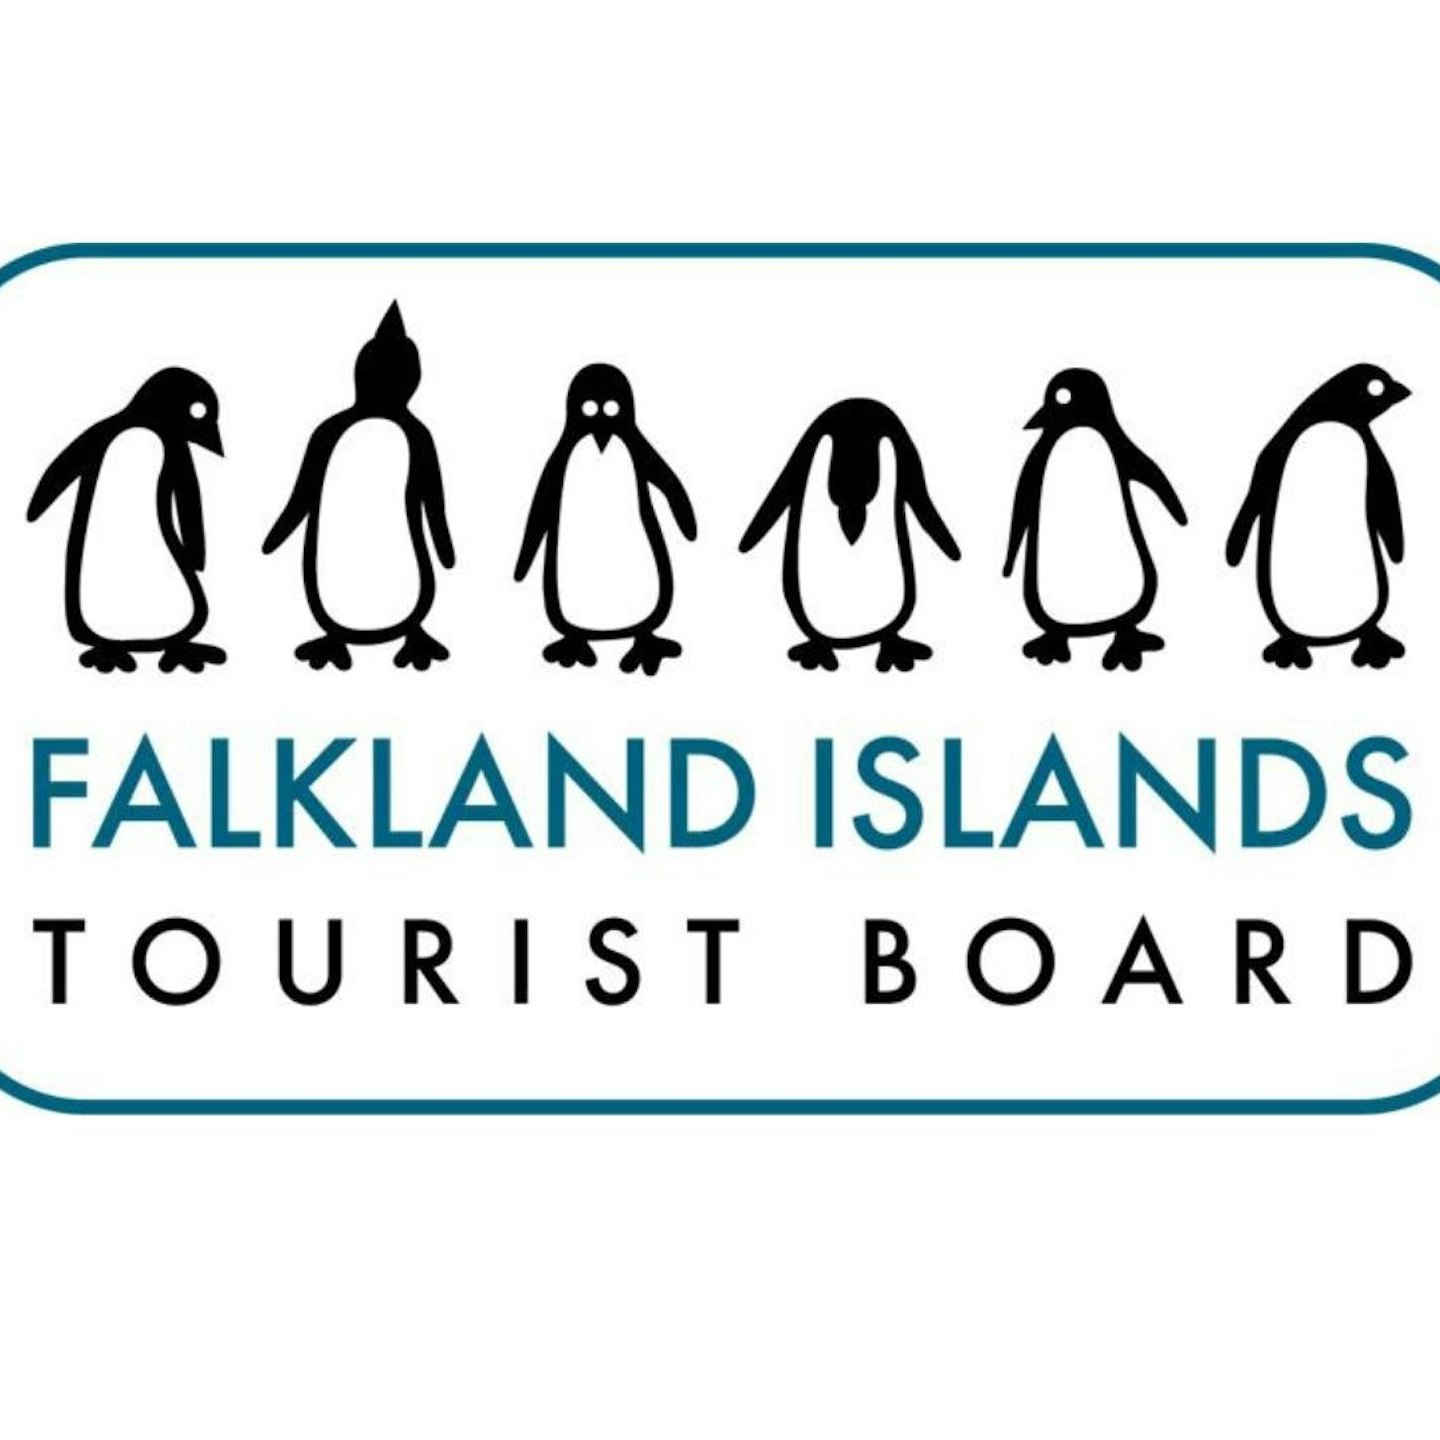 Falkland Islands Tourist Board logo